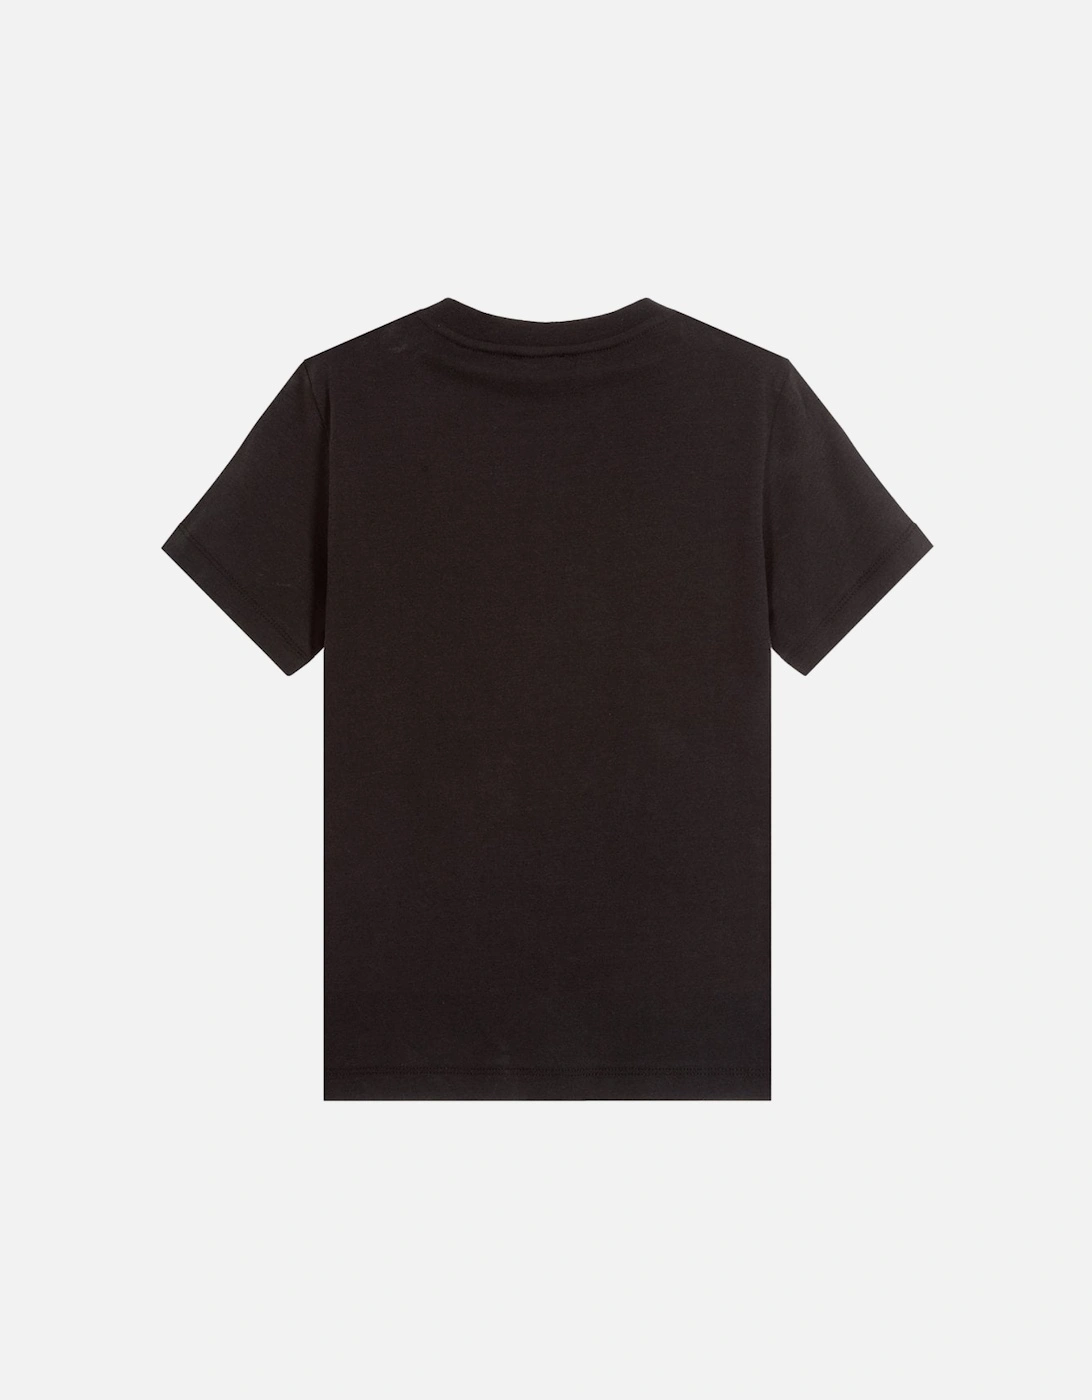 Paris Boys "L" Logo T-Shirt Black